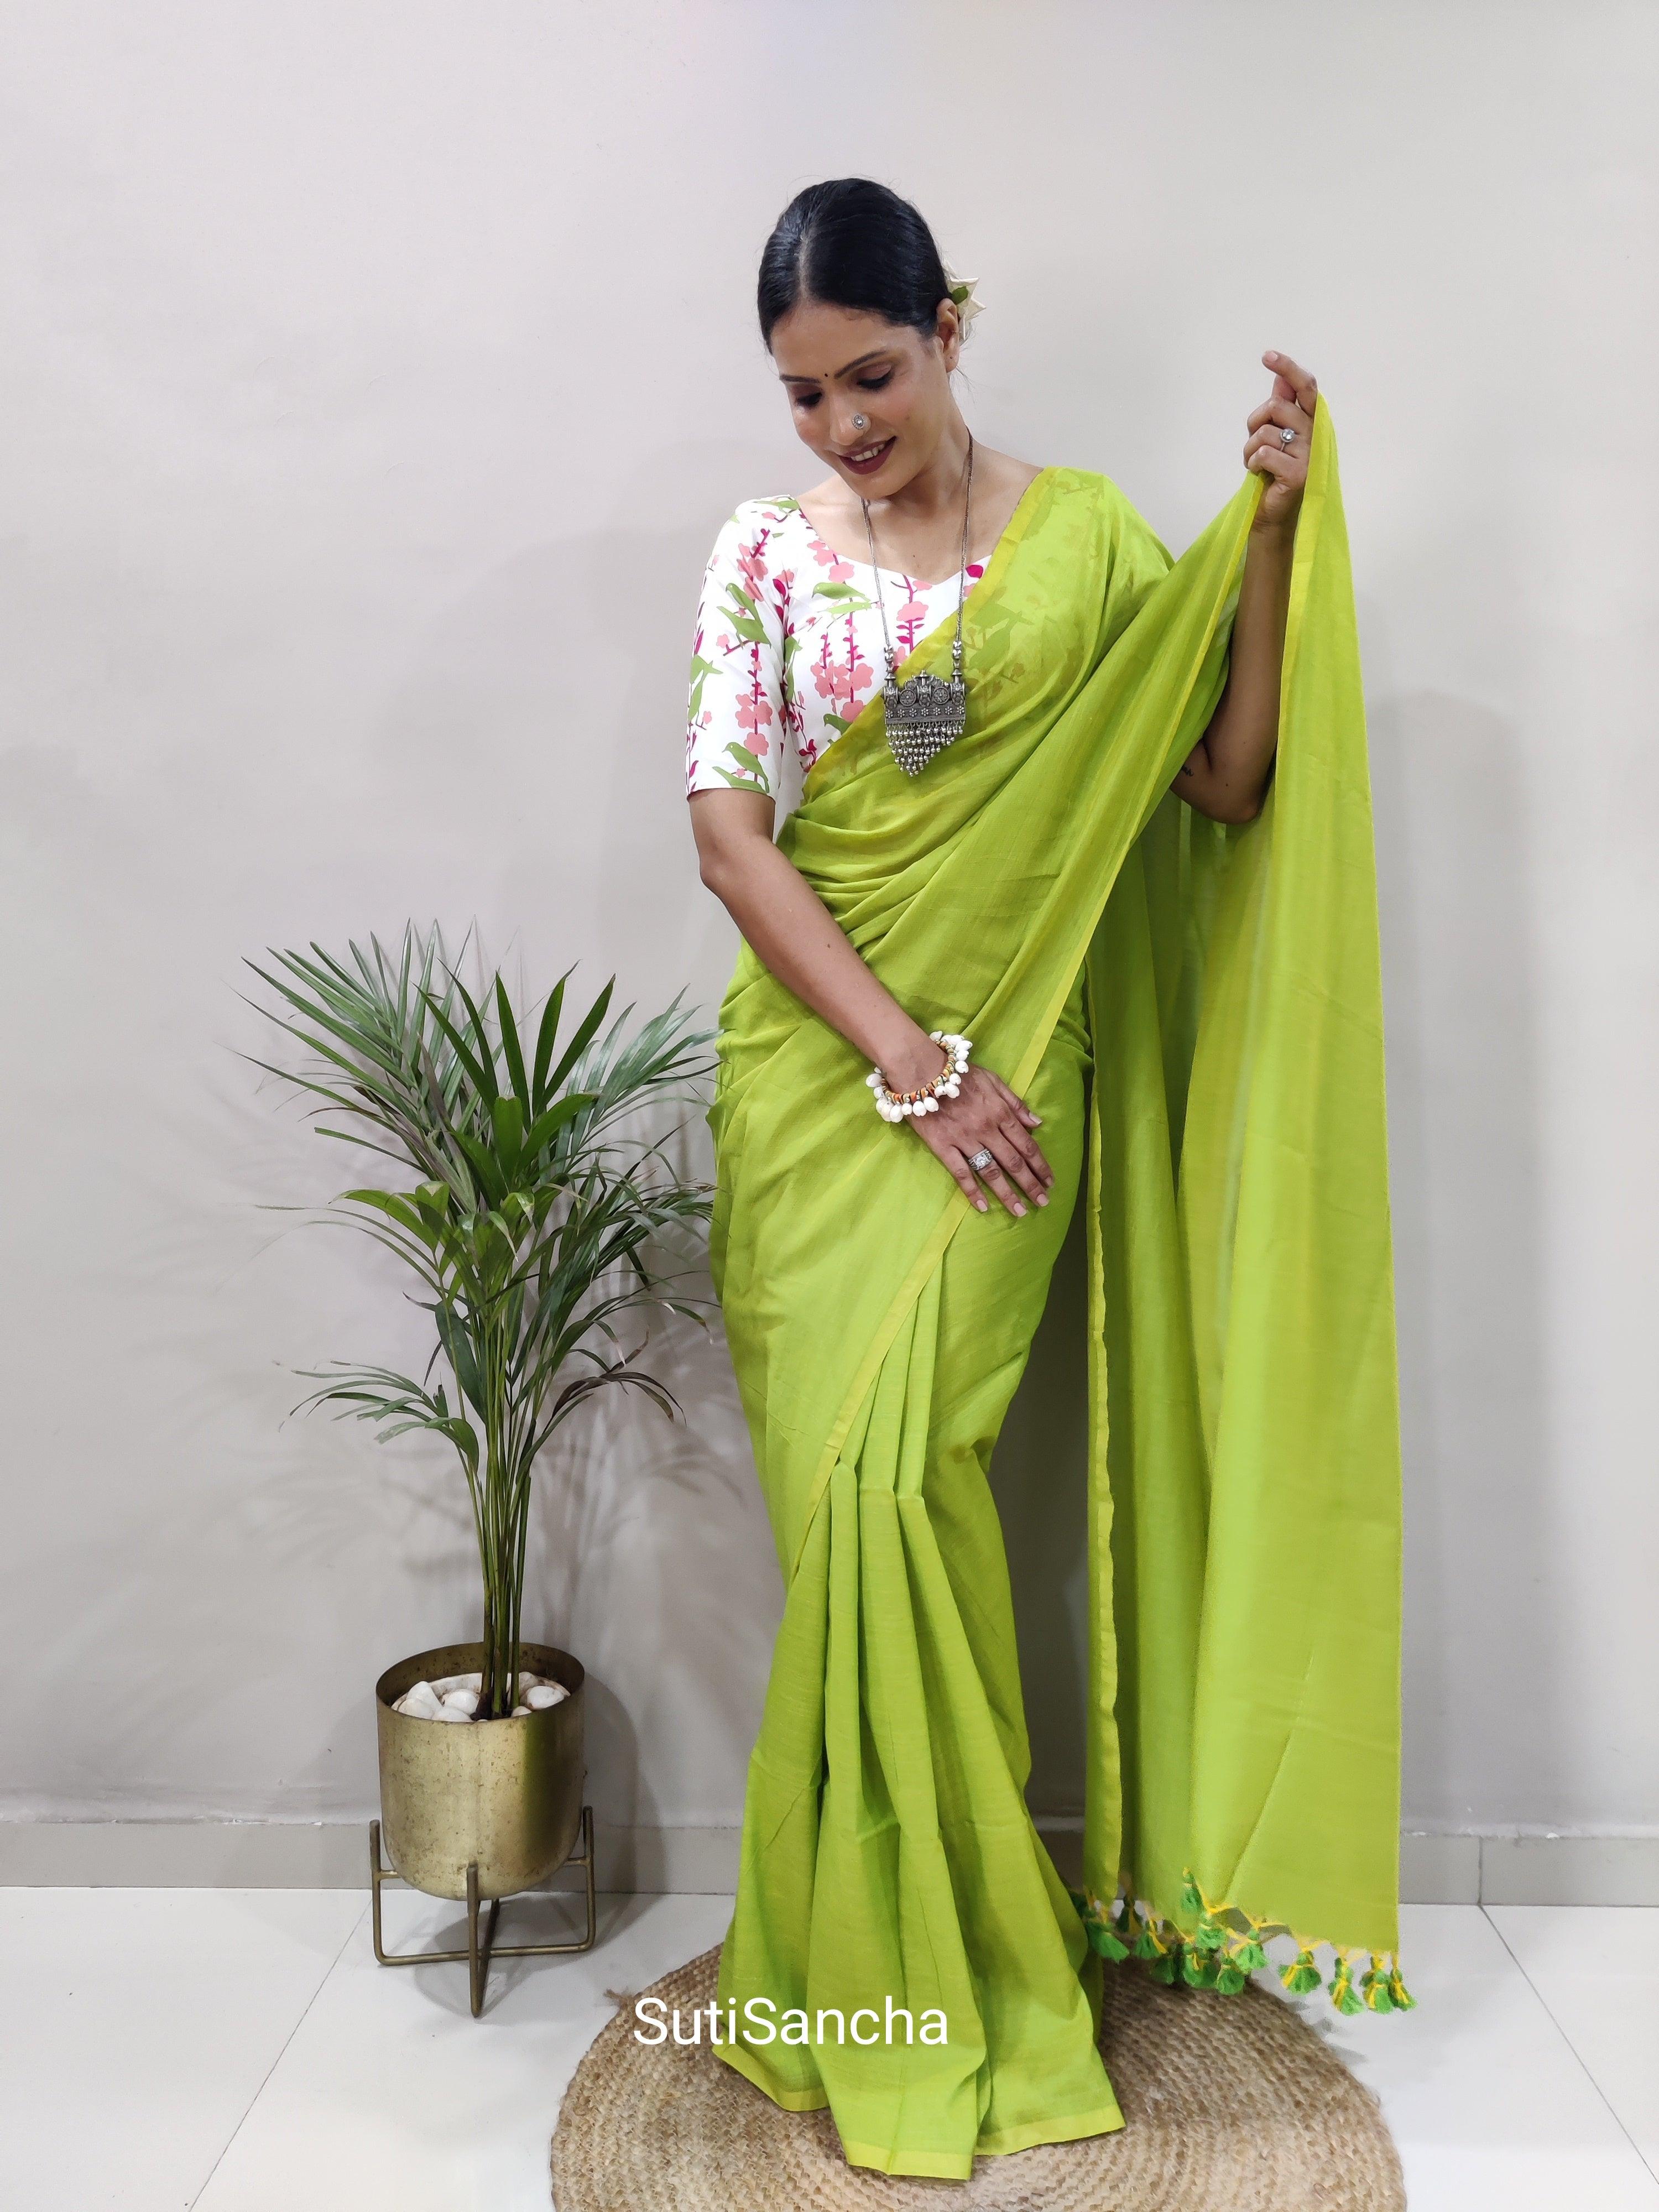 Sutisancha Parrot colour Khadi Saree & designer Blouse - Suti Sancha